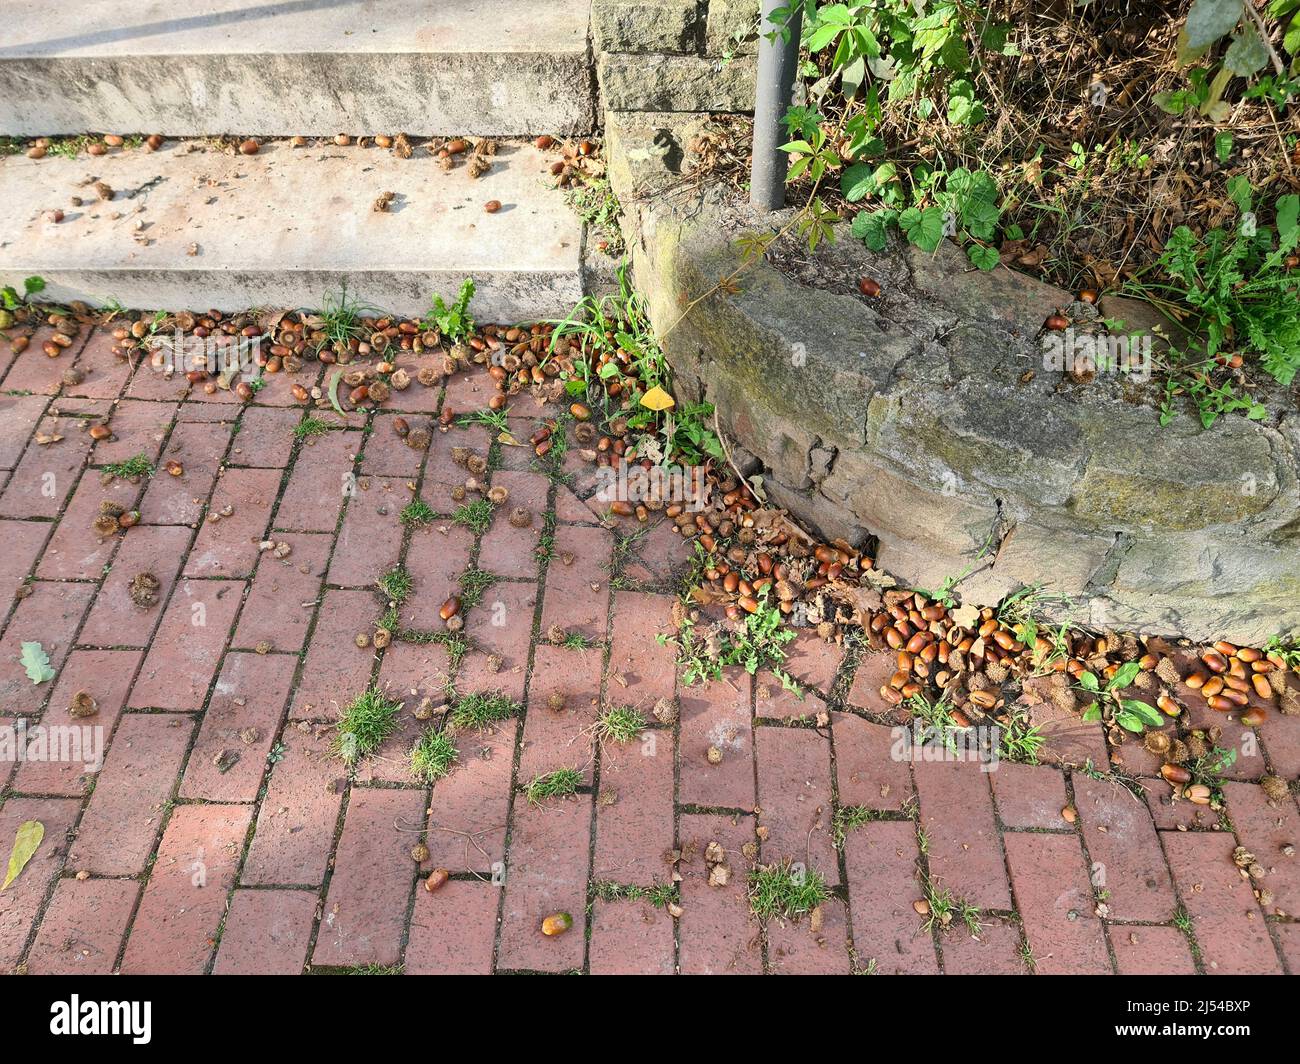 Turkey oak (Quercus cerris), fallen acorns on a pavement, Germany Stock Photo